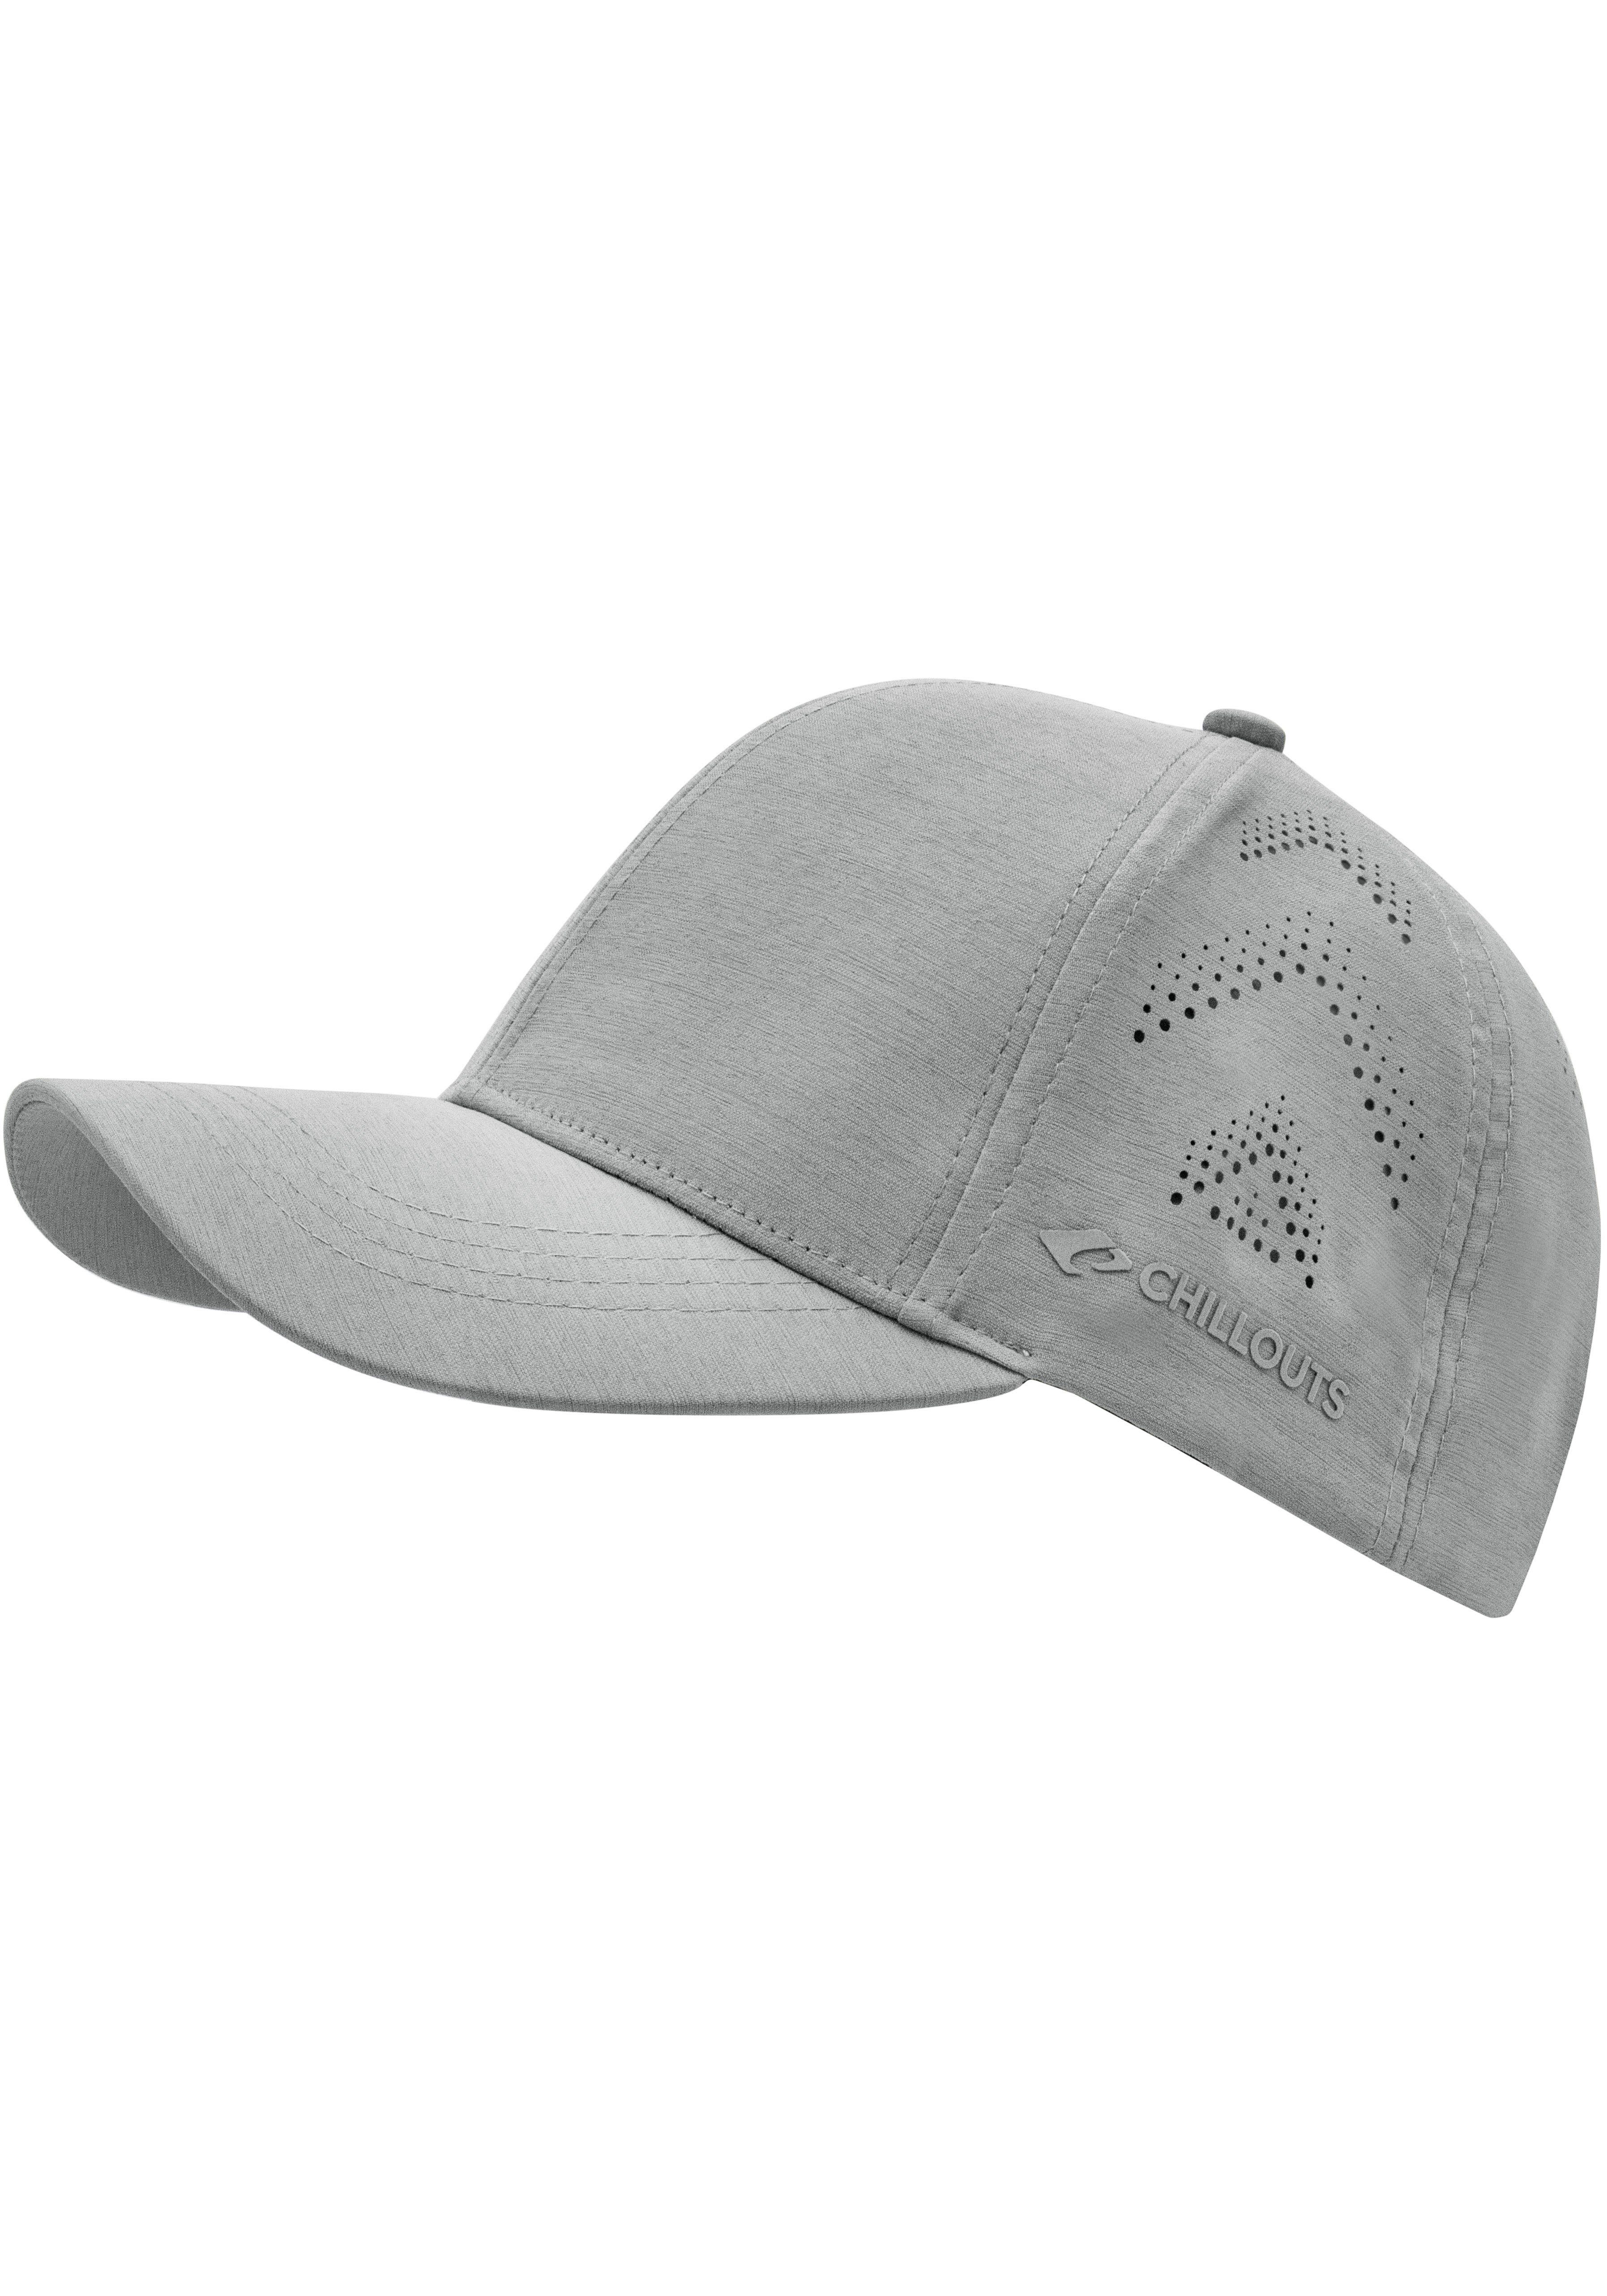 Cap hellgrau Philadelphia Klettverschluß, UPF50+ Baseball Hat, chillouts mit Cap